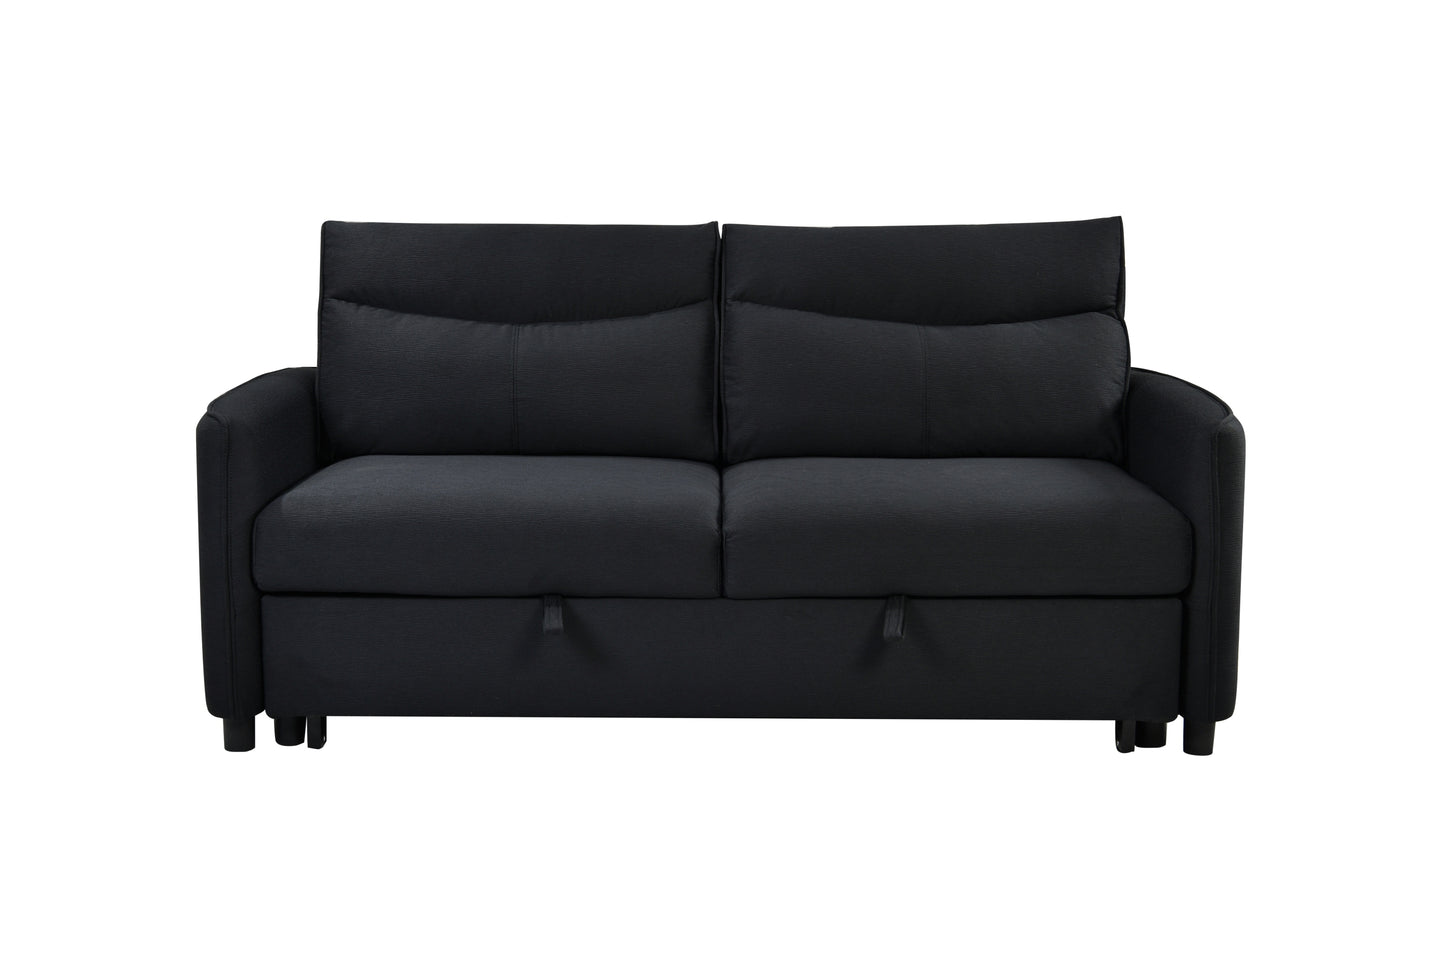 Kirby 3 in 1 Convertible Sleeper Sofa Bed (black)